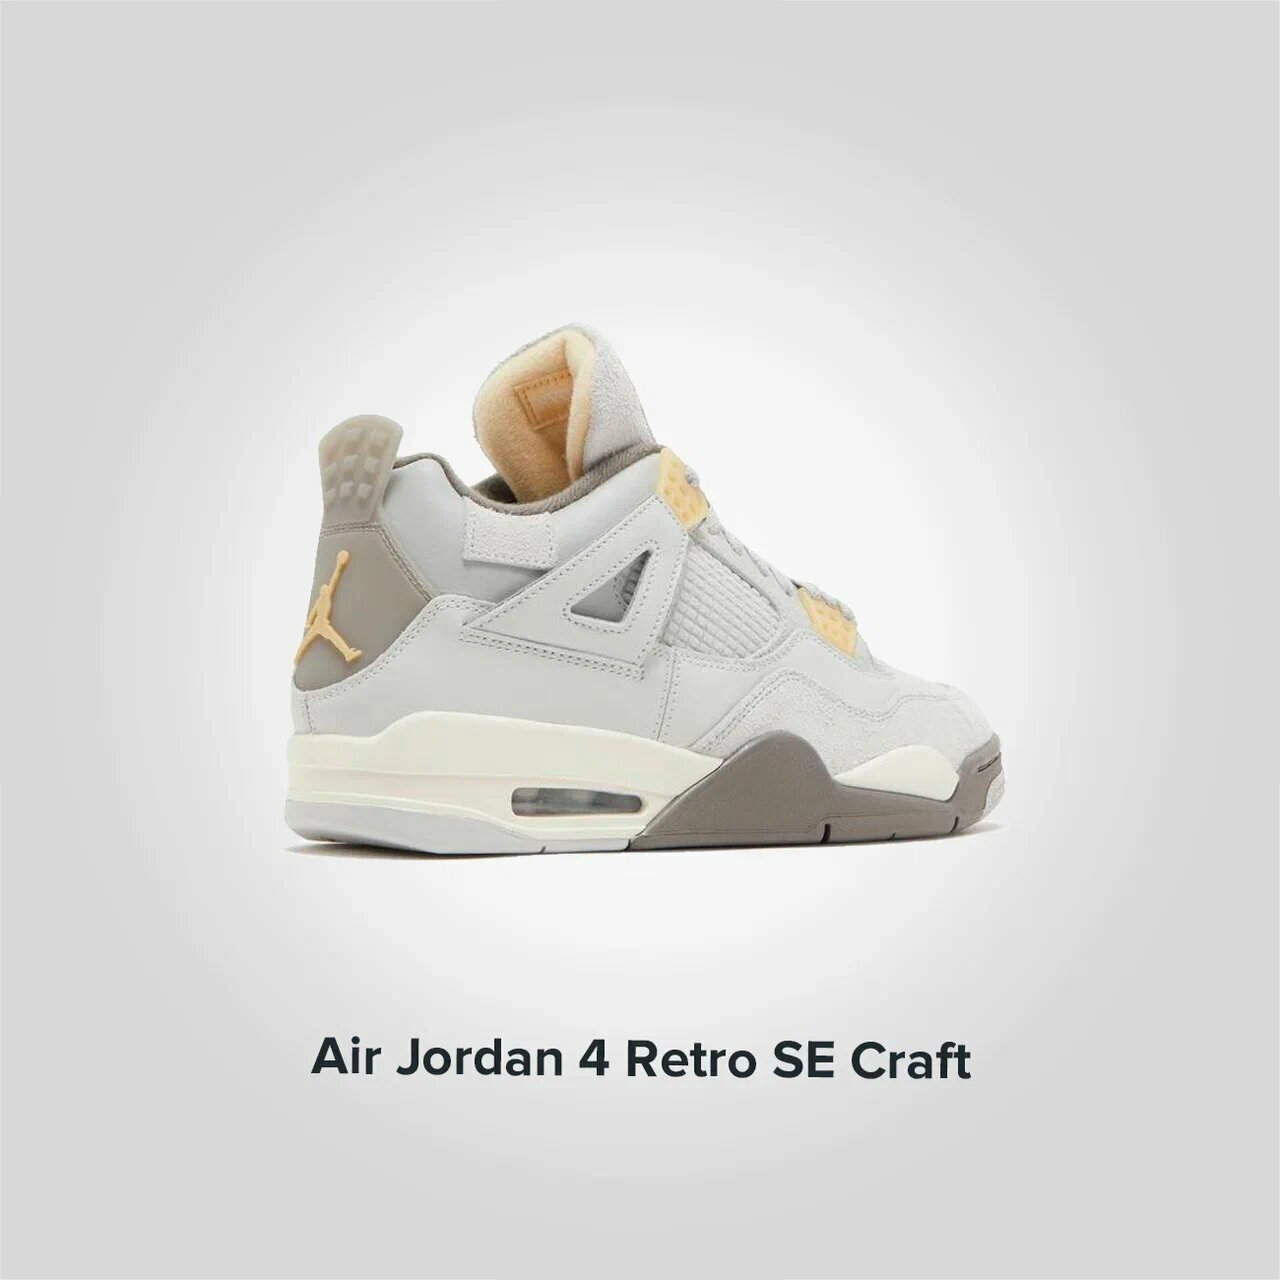 Jordan 4 Retro SE Craft